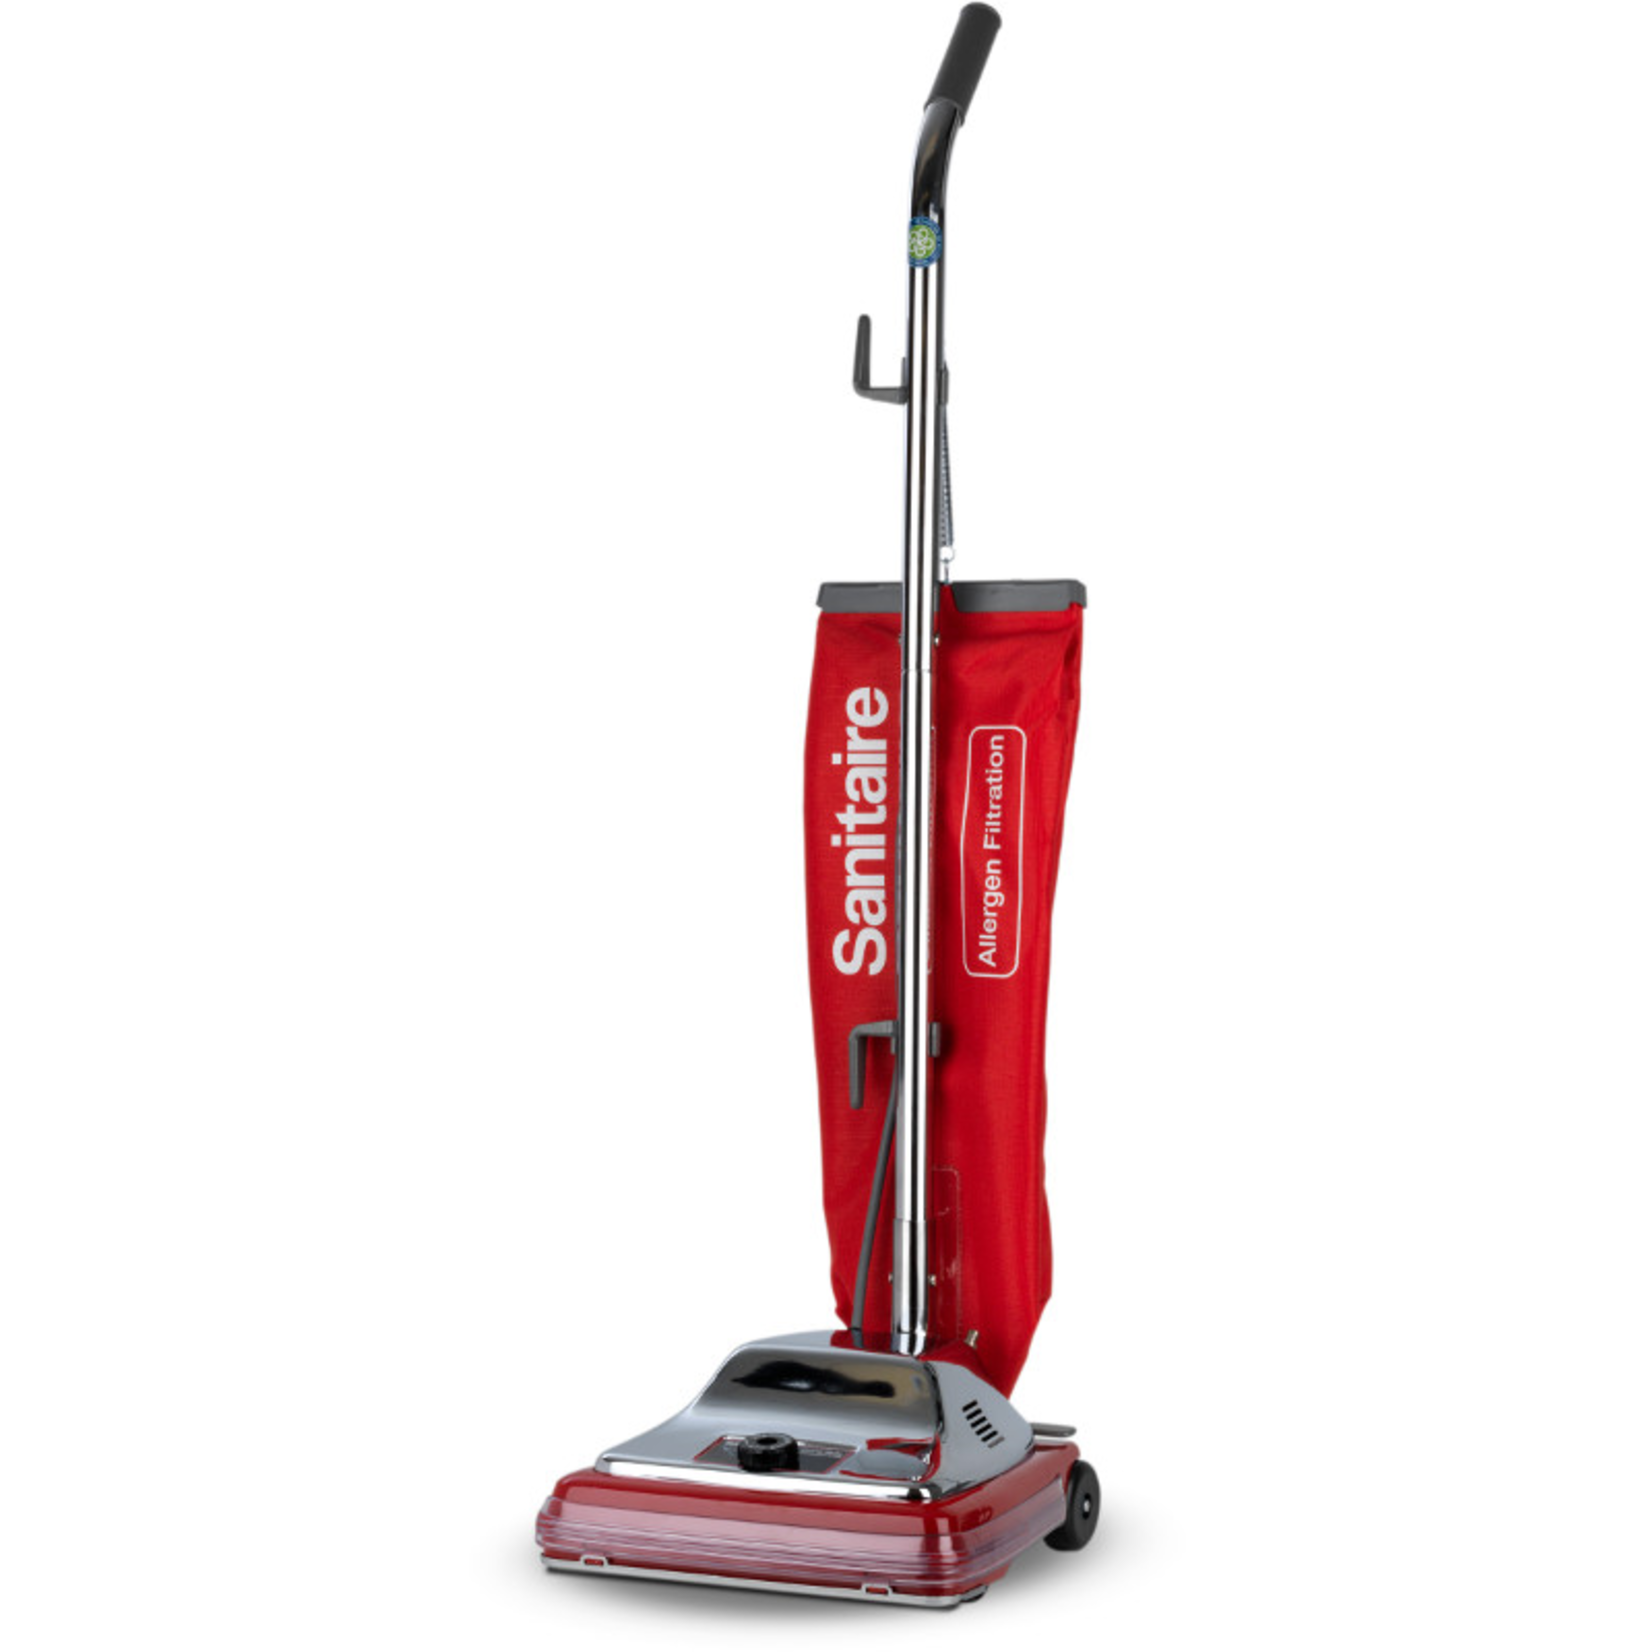 Sanitaire Sanitaire Upright Vacuum - 888 Red